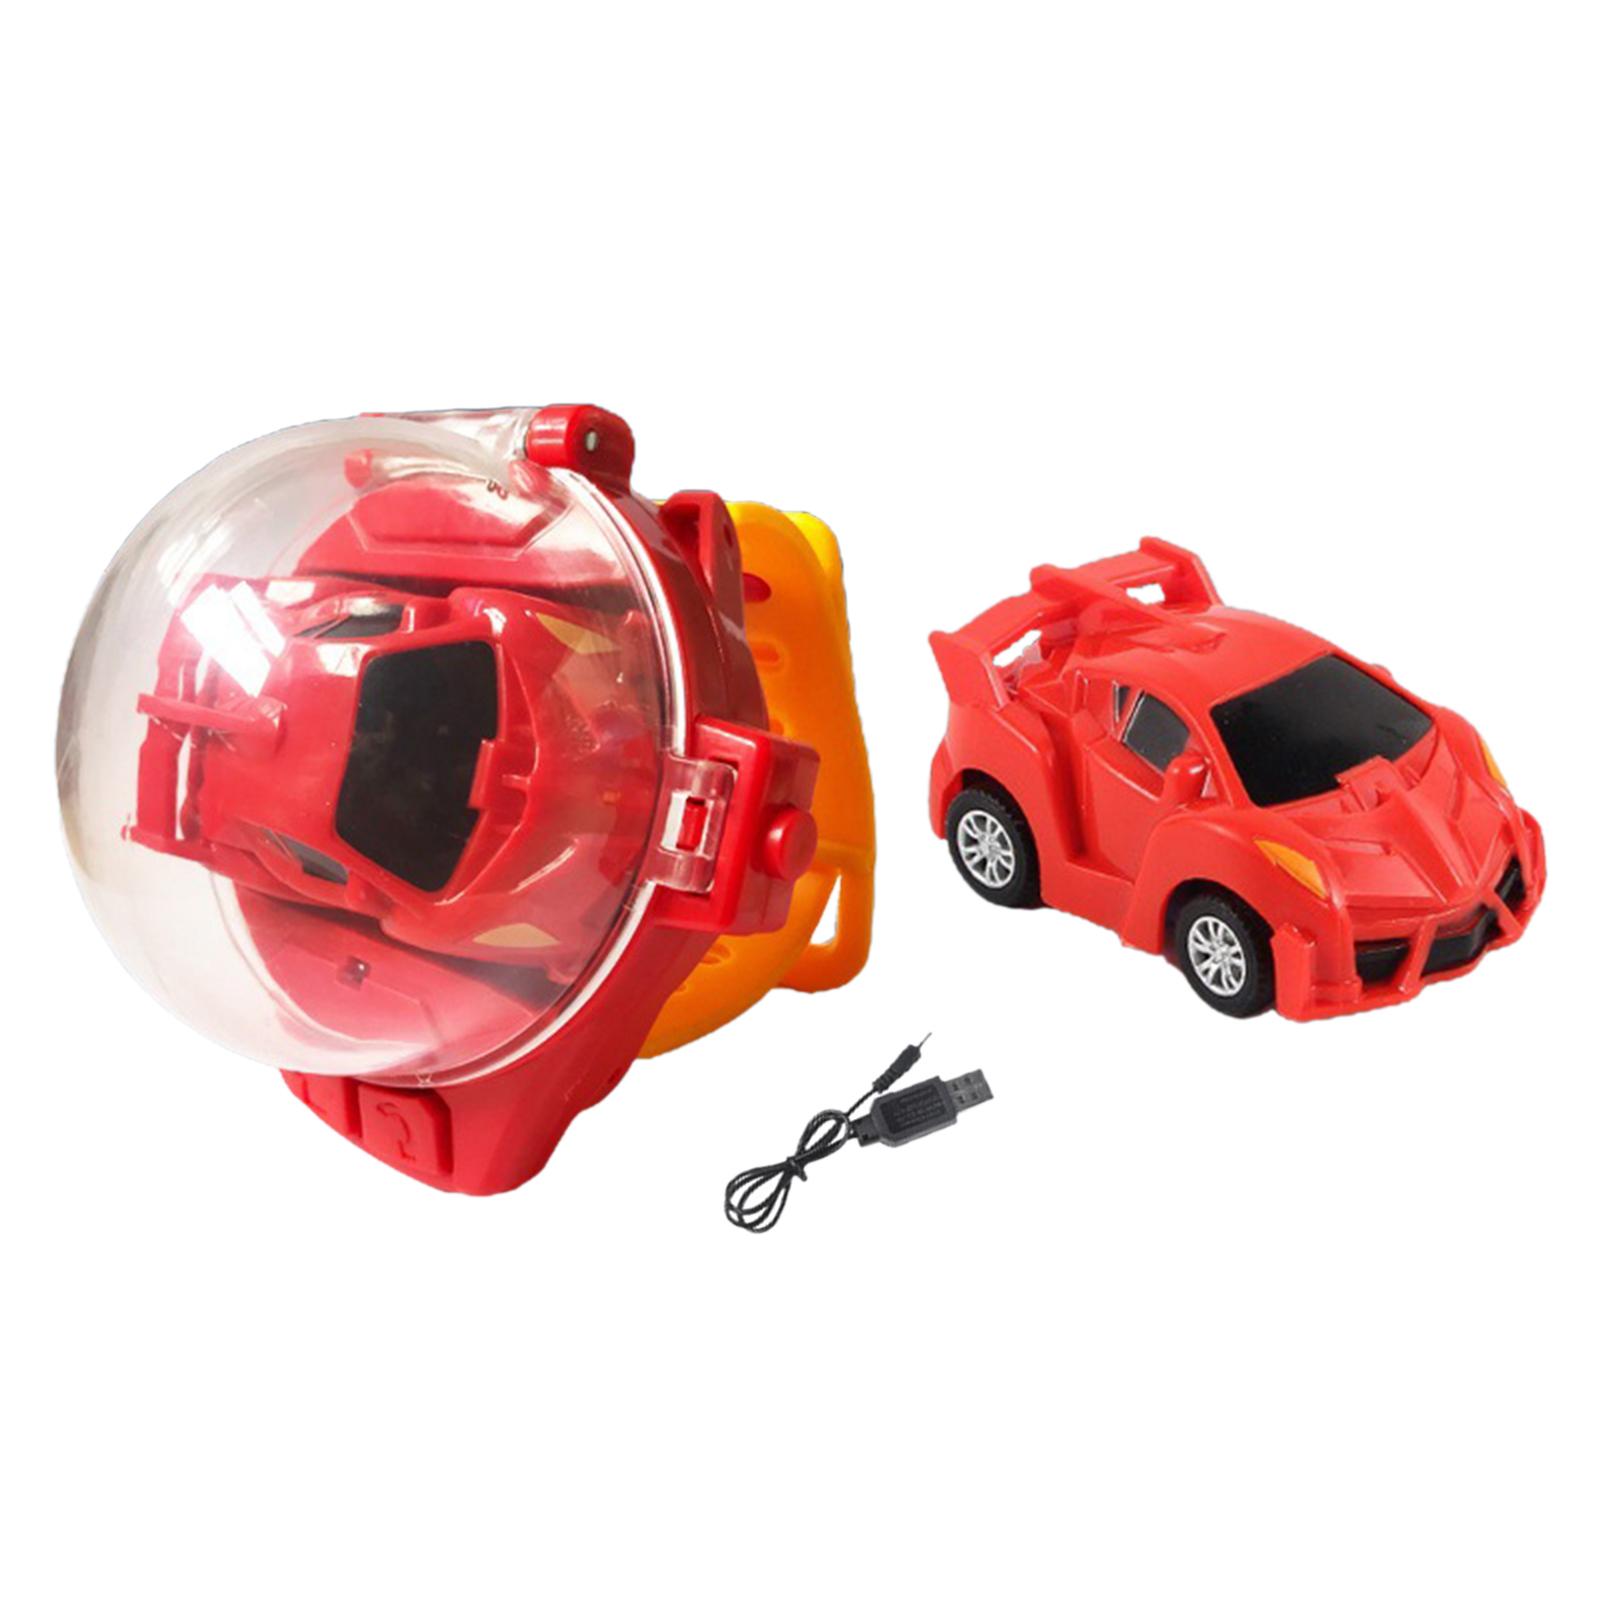 Mini Remote Control Car Watch Toy Cute RC Car Kids Gift for Boys Girls Birthday Christmas Watch RC Car Toy Electric Wrist Watch